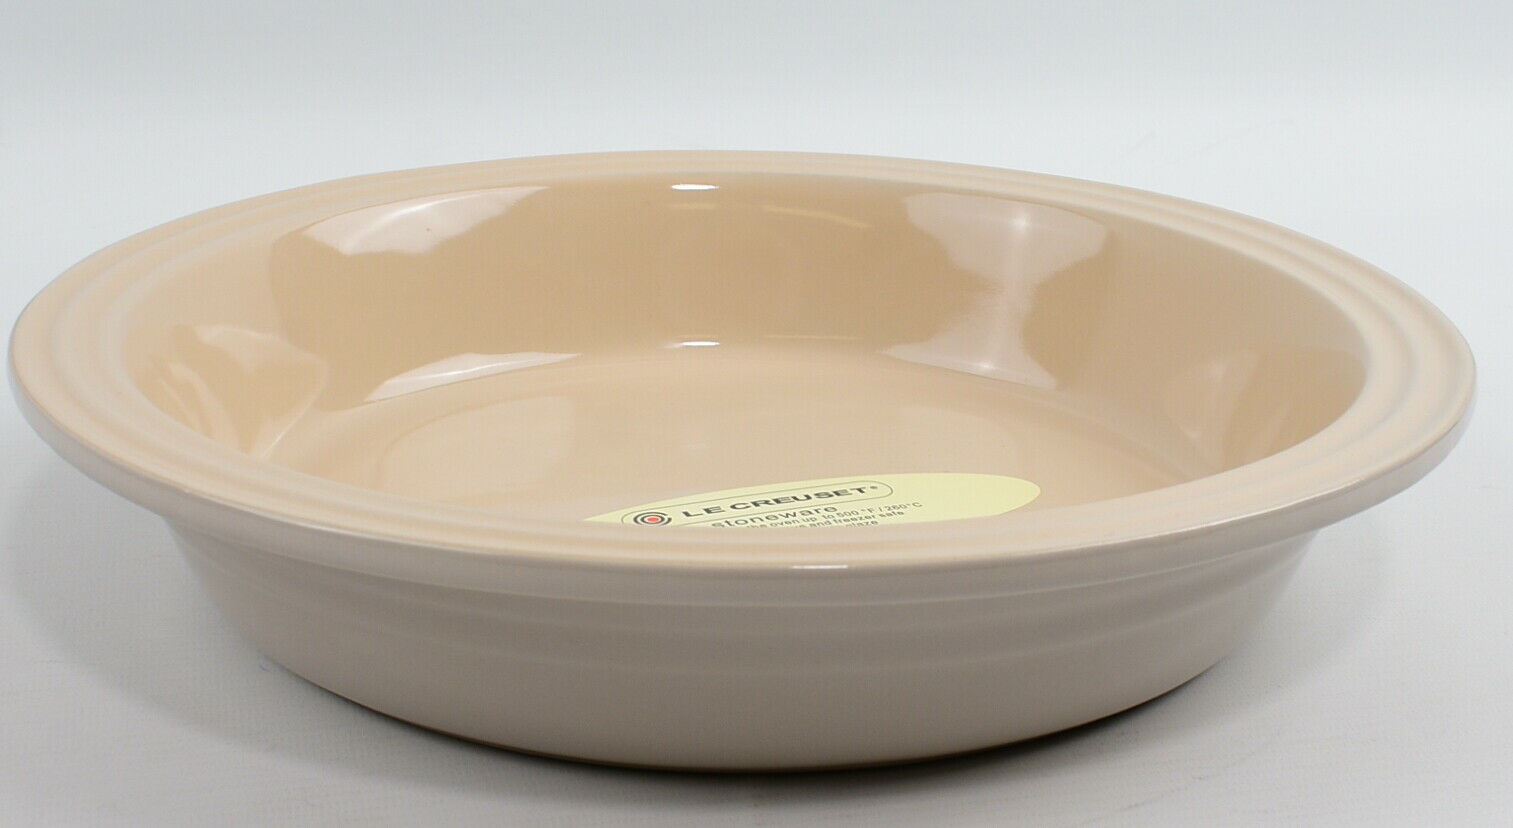 LE CREUSET Round Baking Dish 26cm in diameter x 5.5cm deep - Mushroom Grey